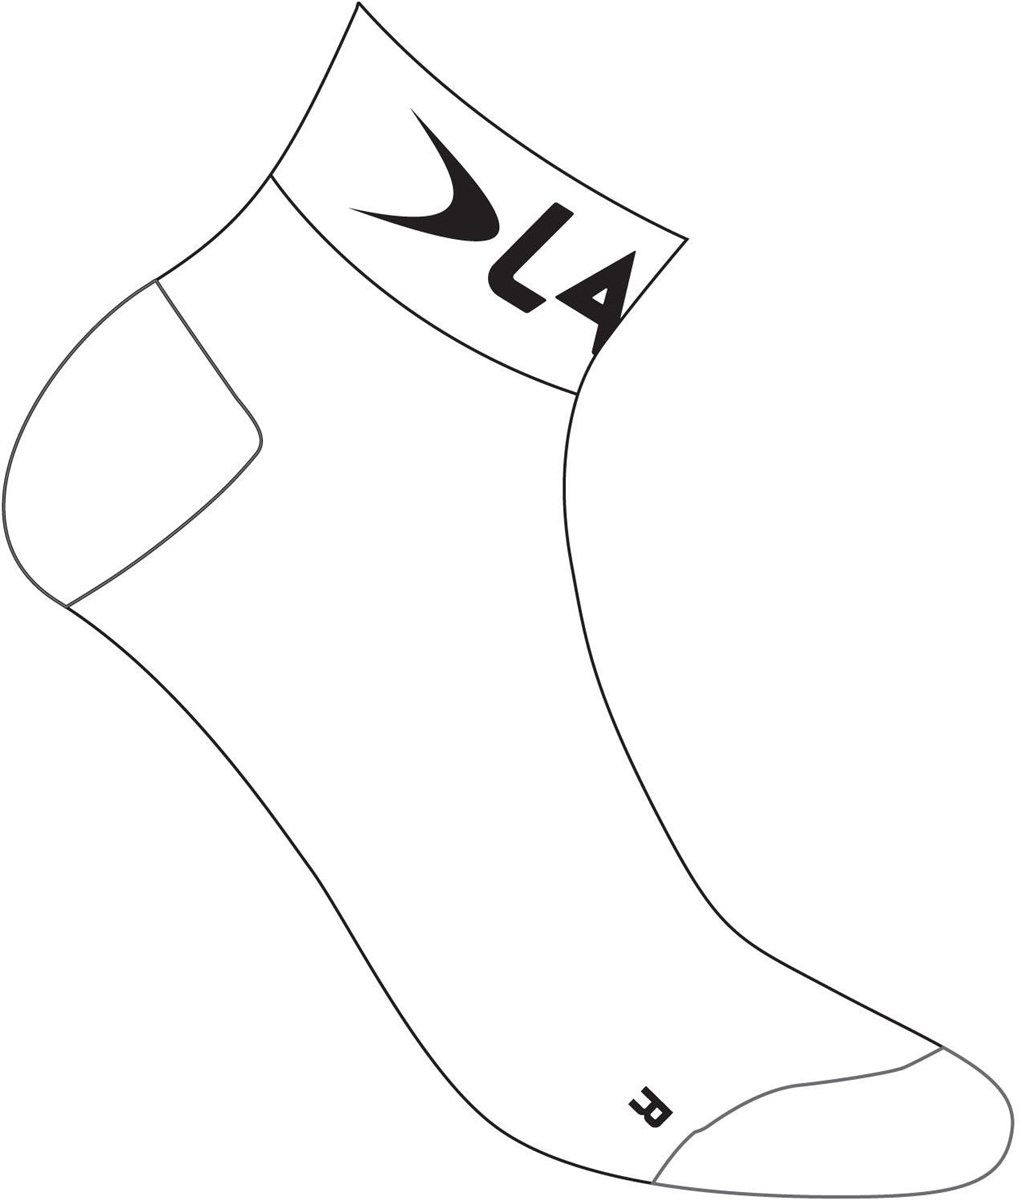 Lake Coolmax Socks product image